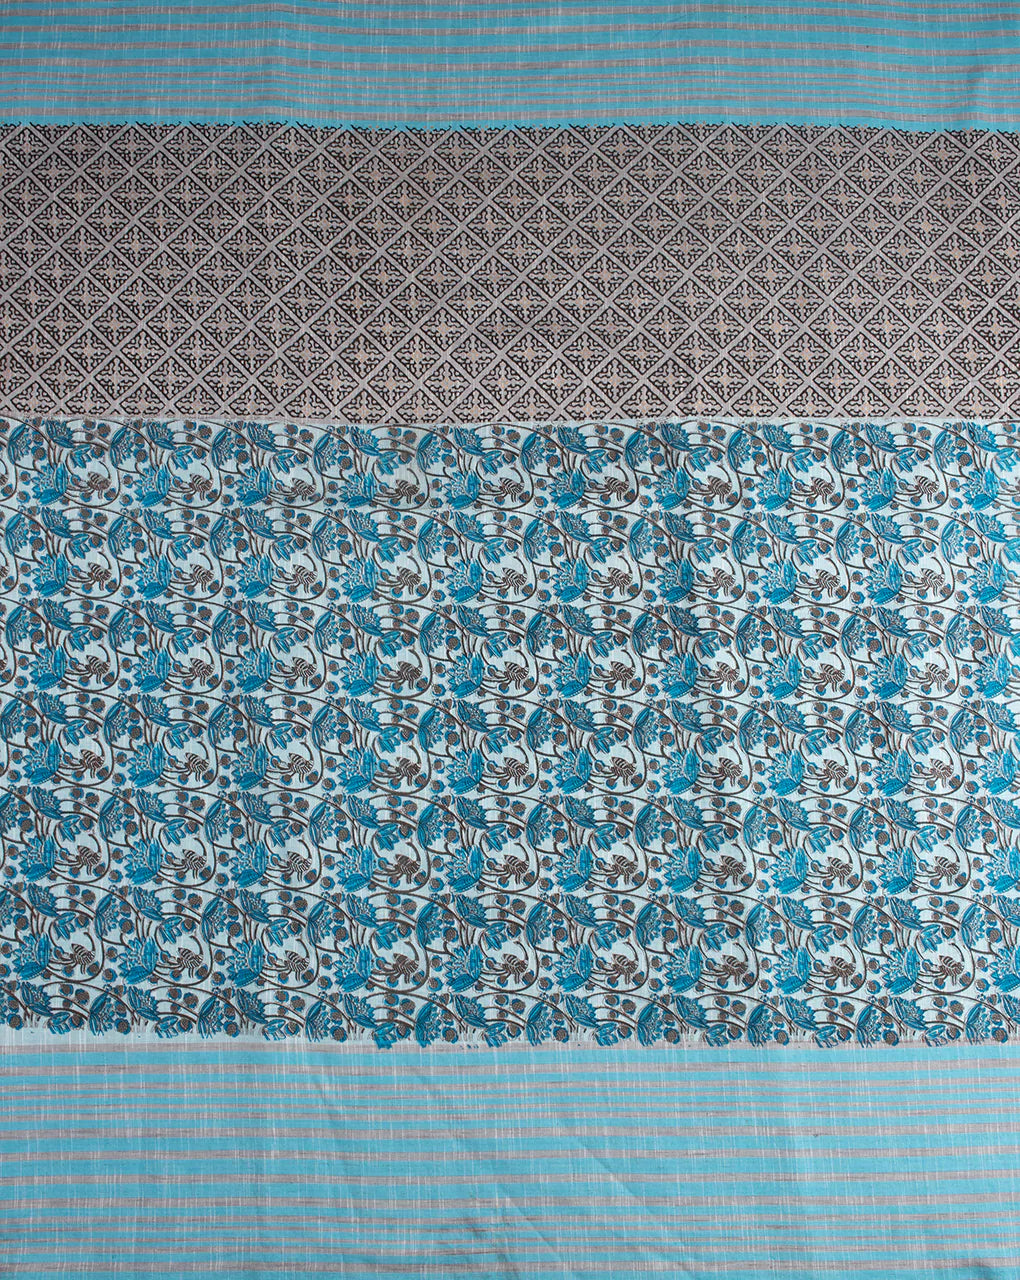 Screen Print BordeLoom Textured Cotton Fabric - Fabriclore.com